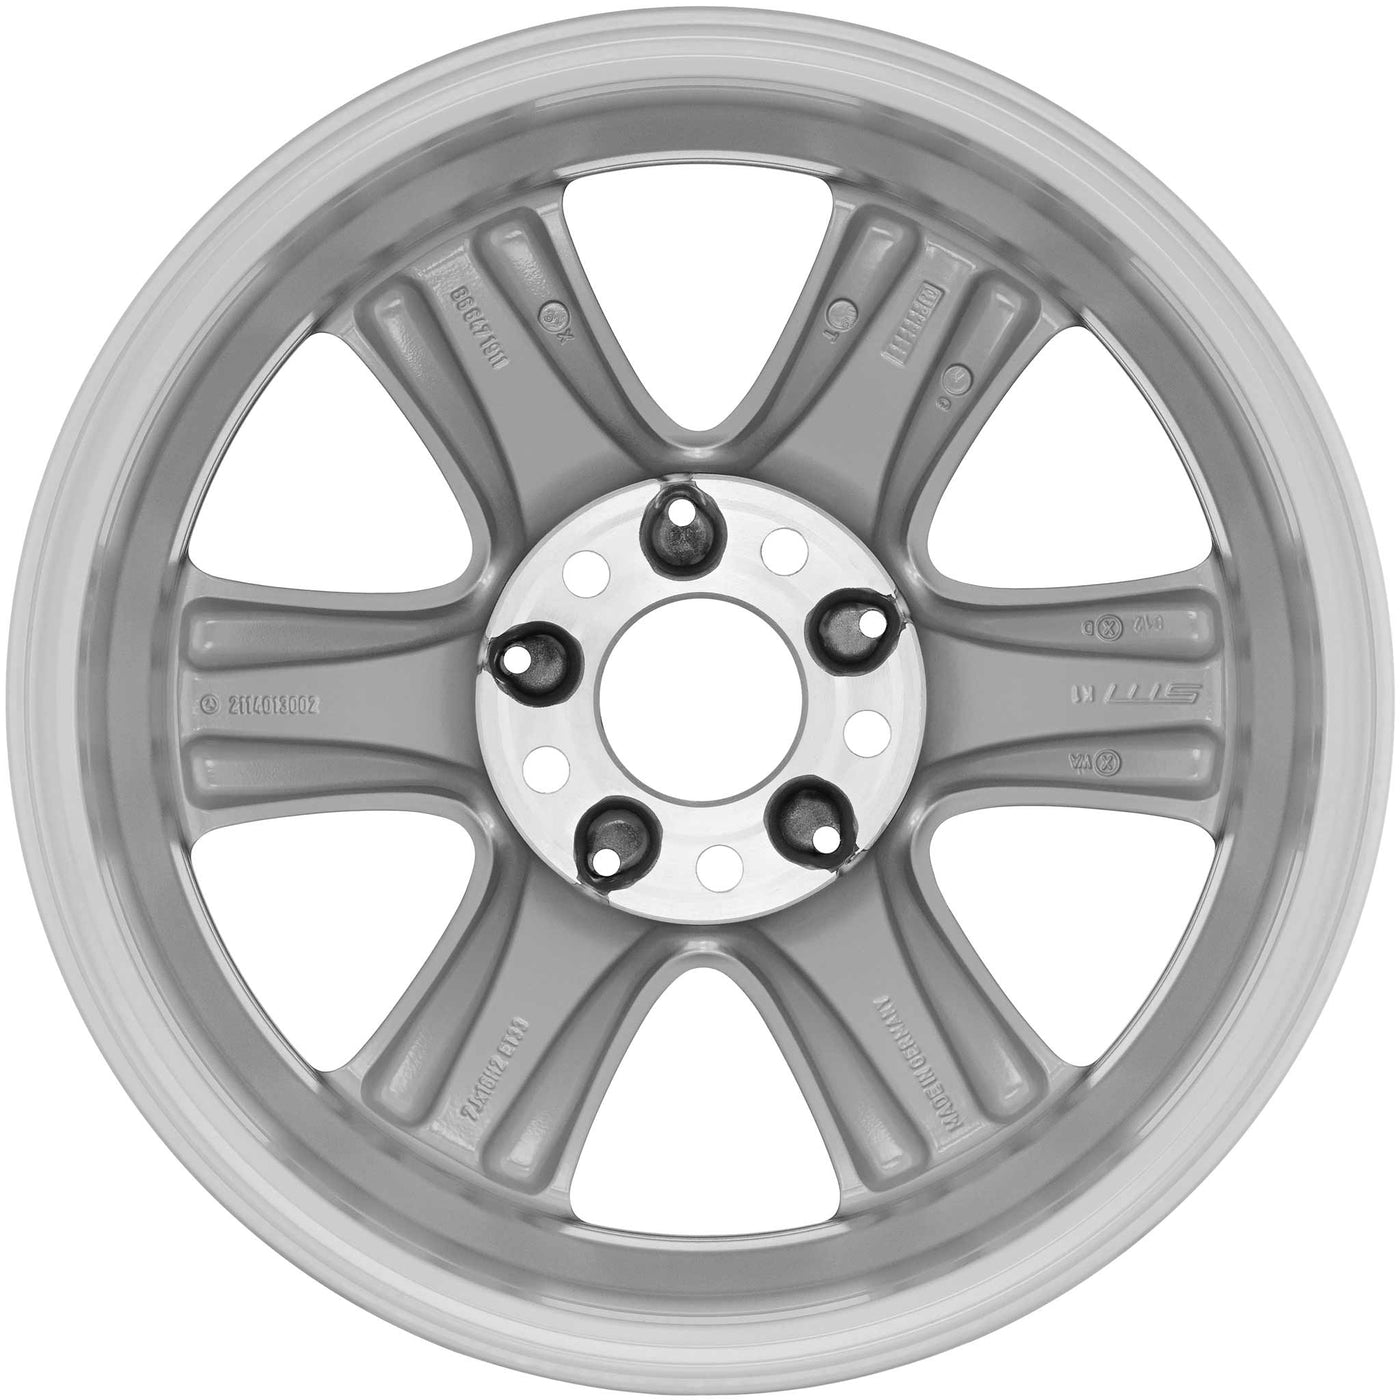 16" Mercedes Benz wheel (used)